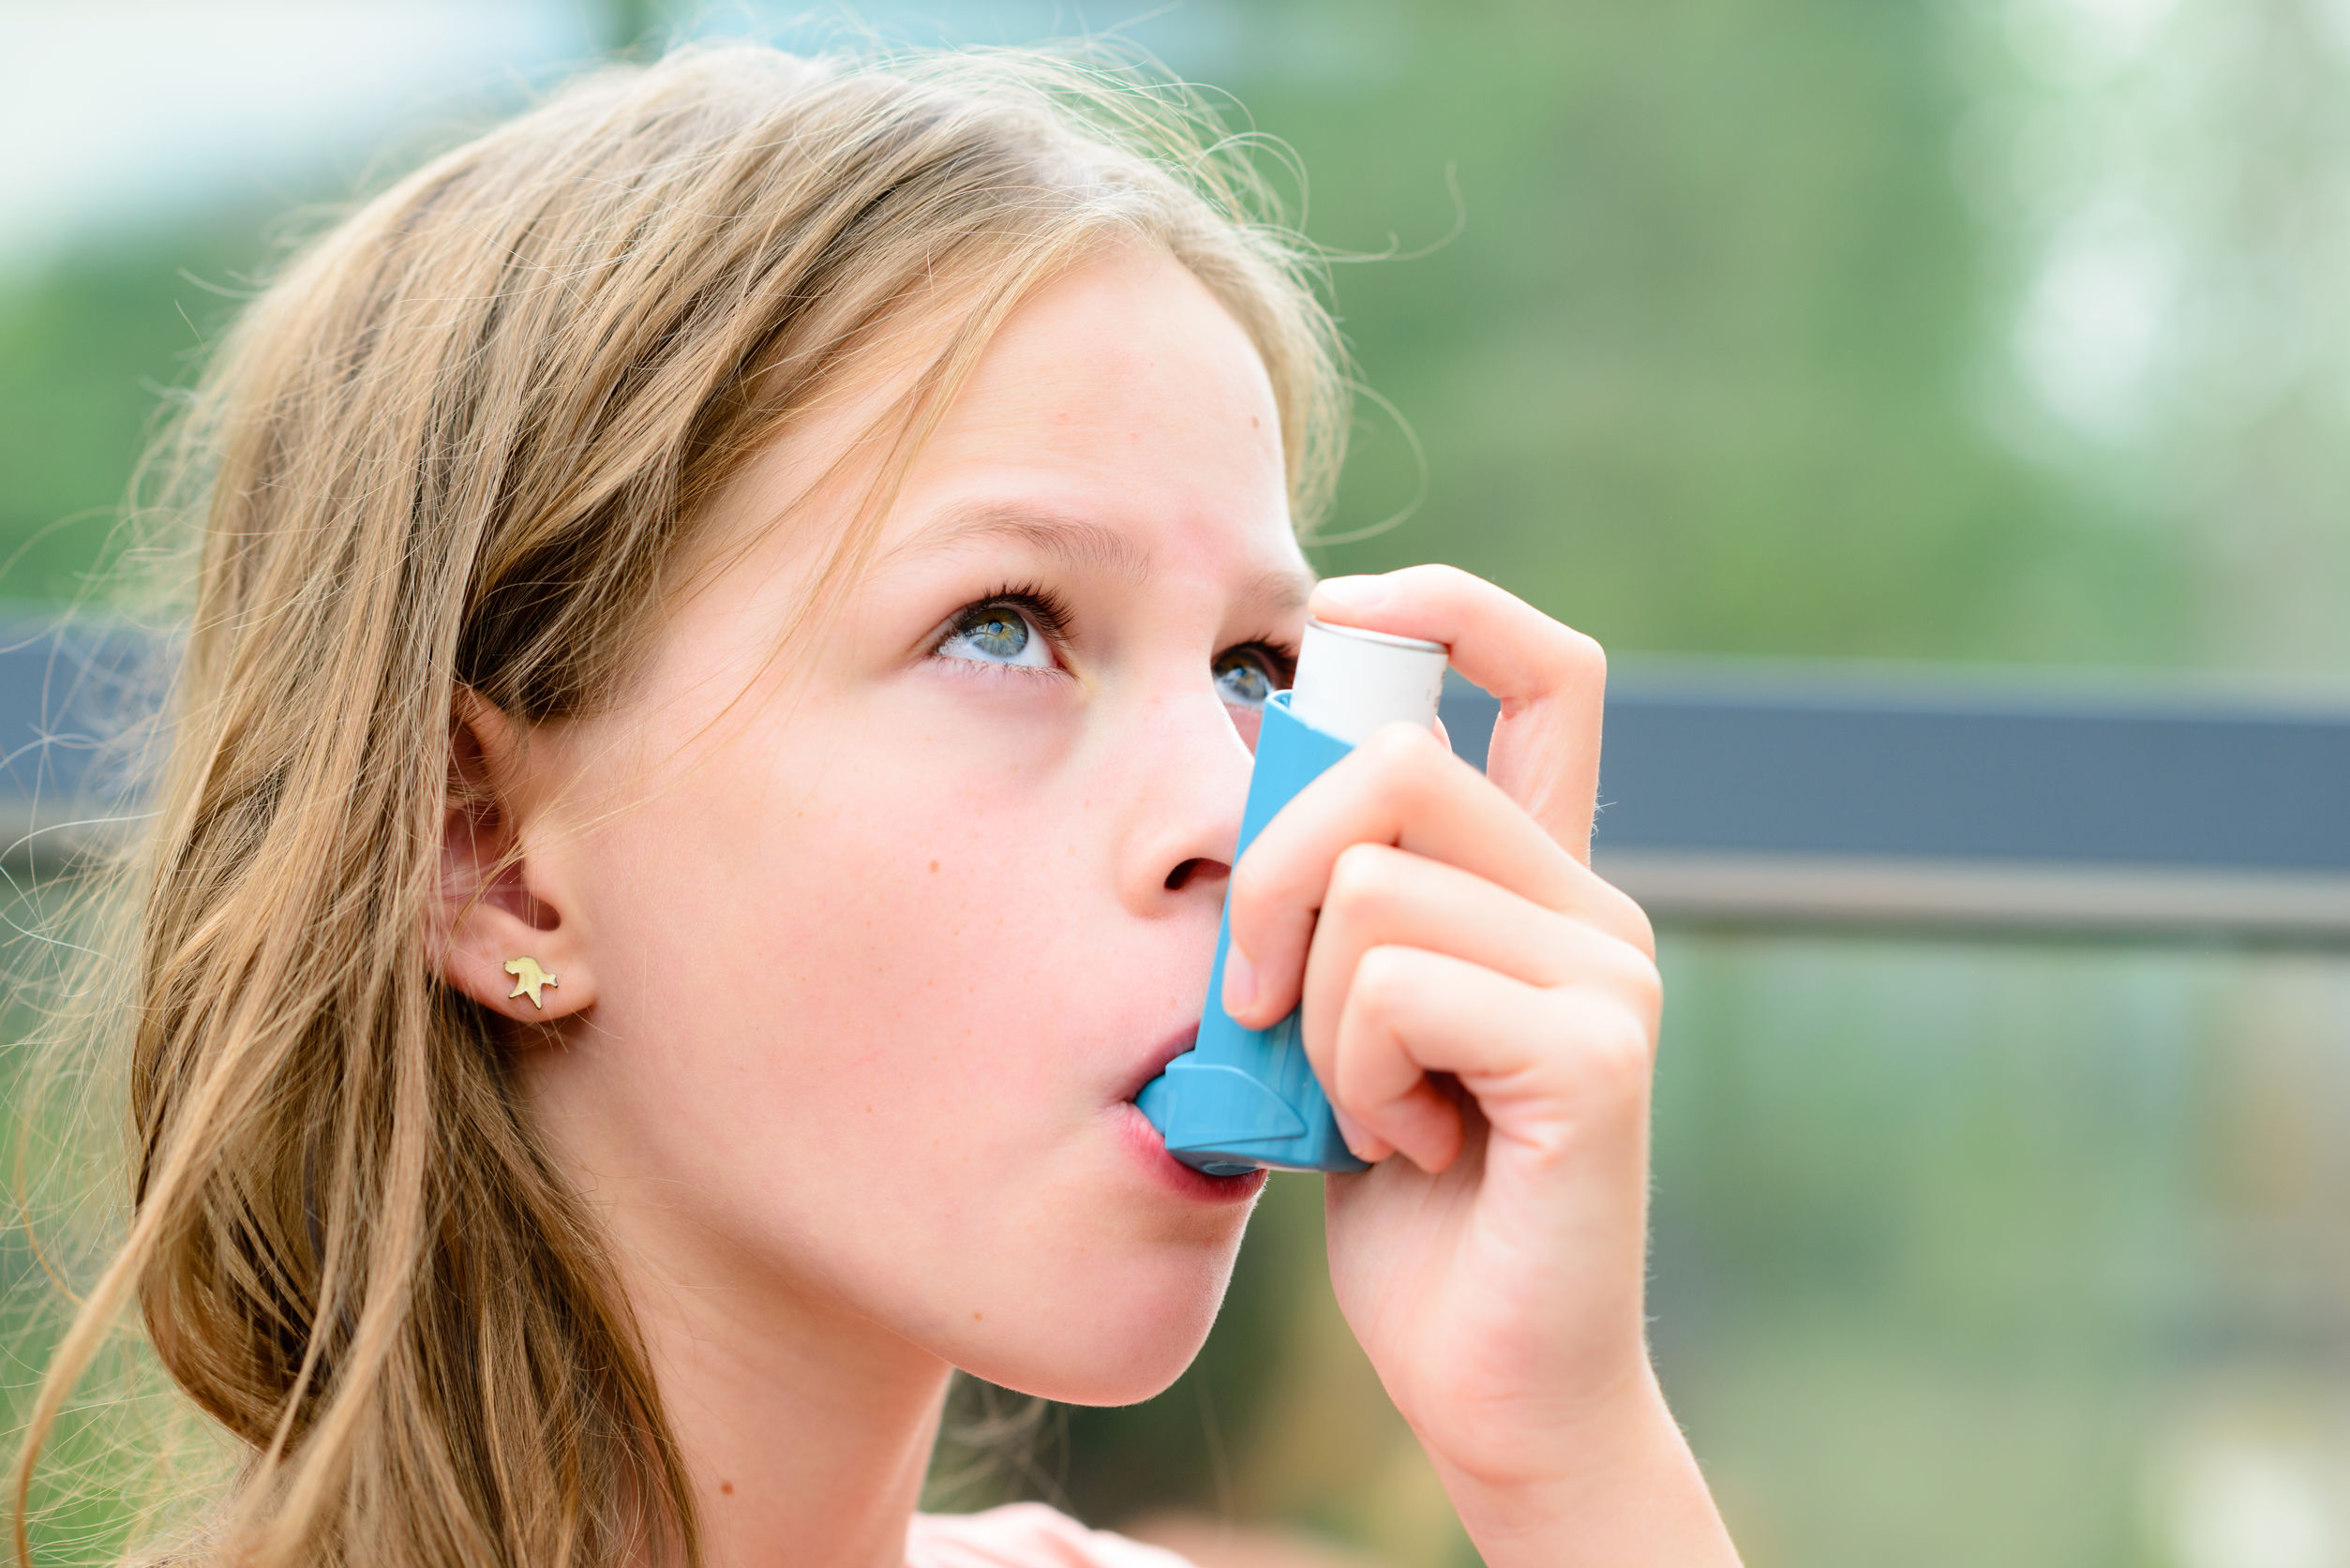 Girl having asthma using the asthma inhaler